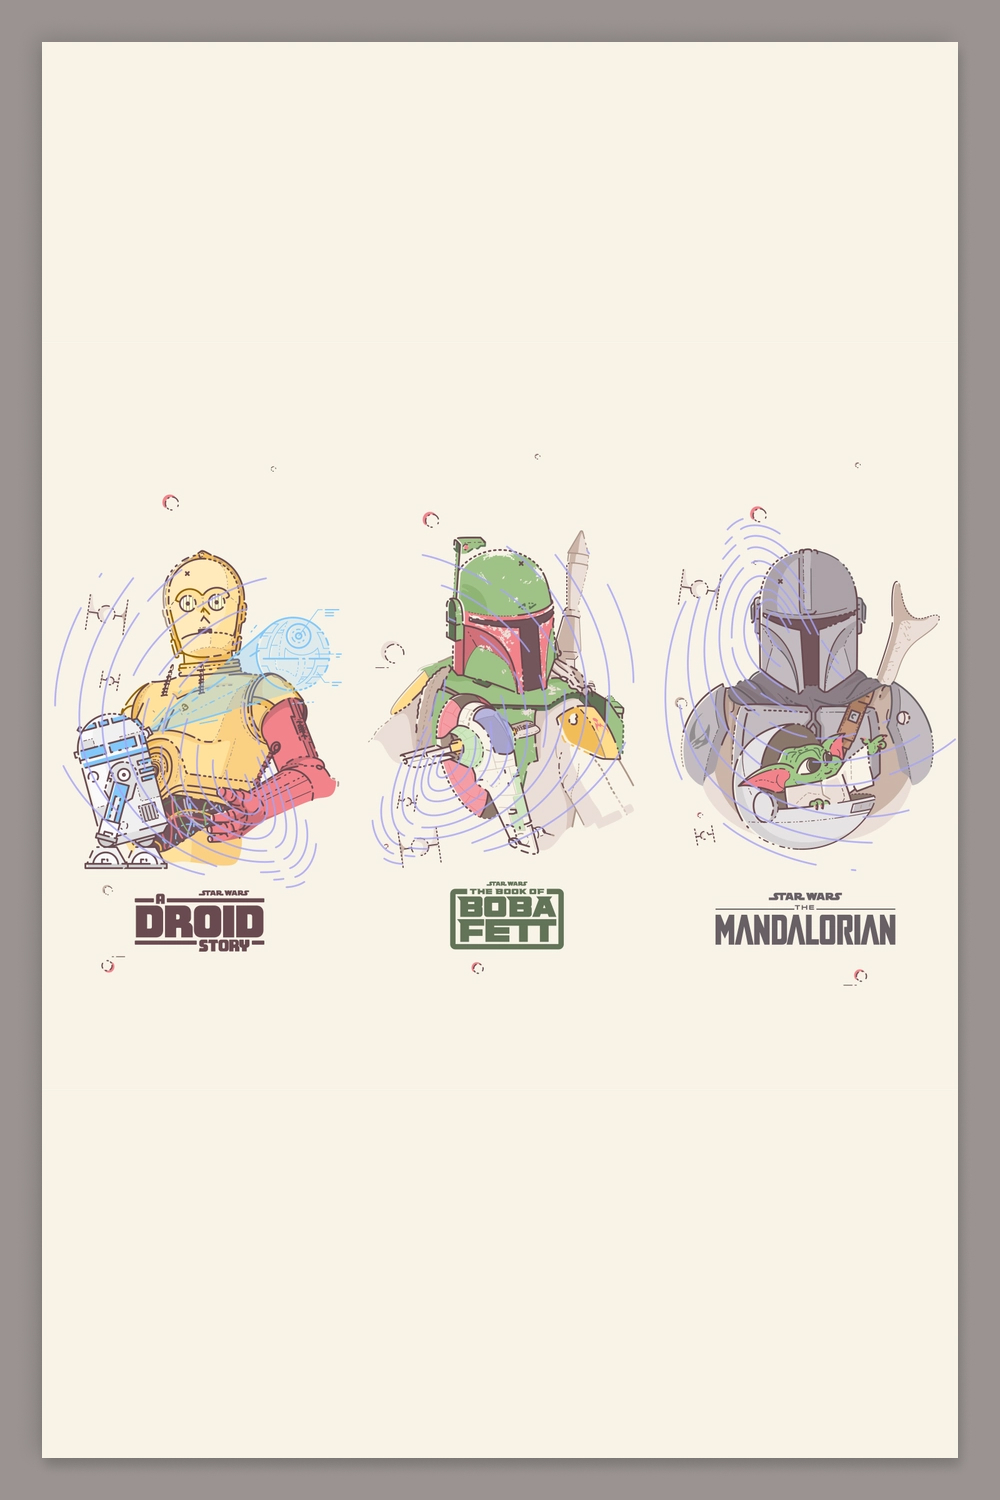 Starwars poster with C-3PO, Boba Fett and Mandalorian.